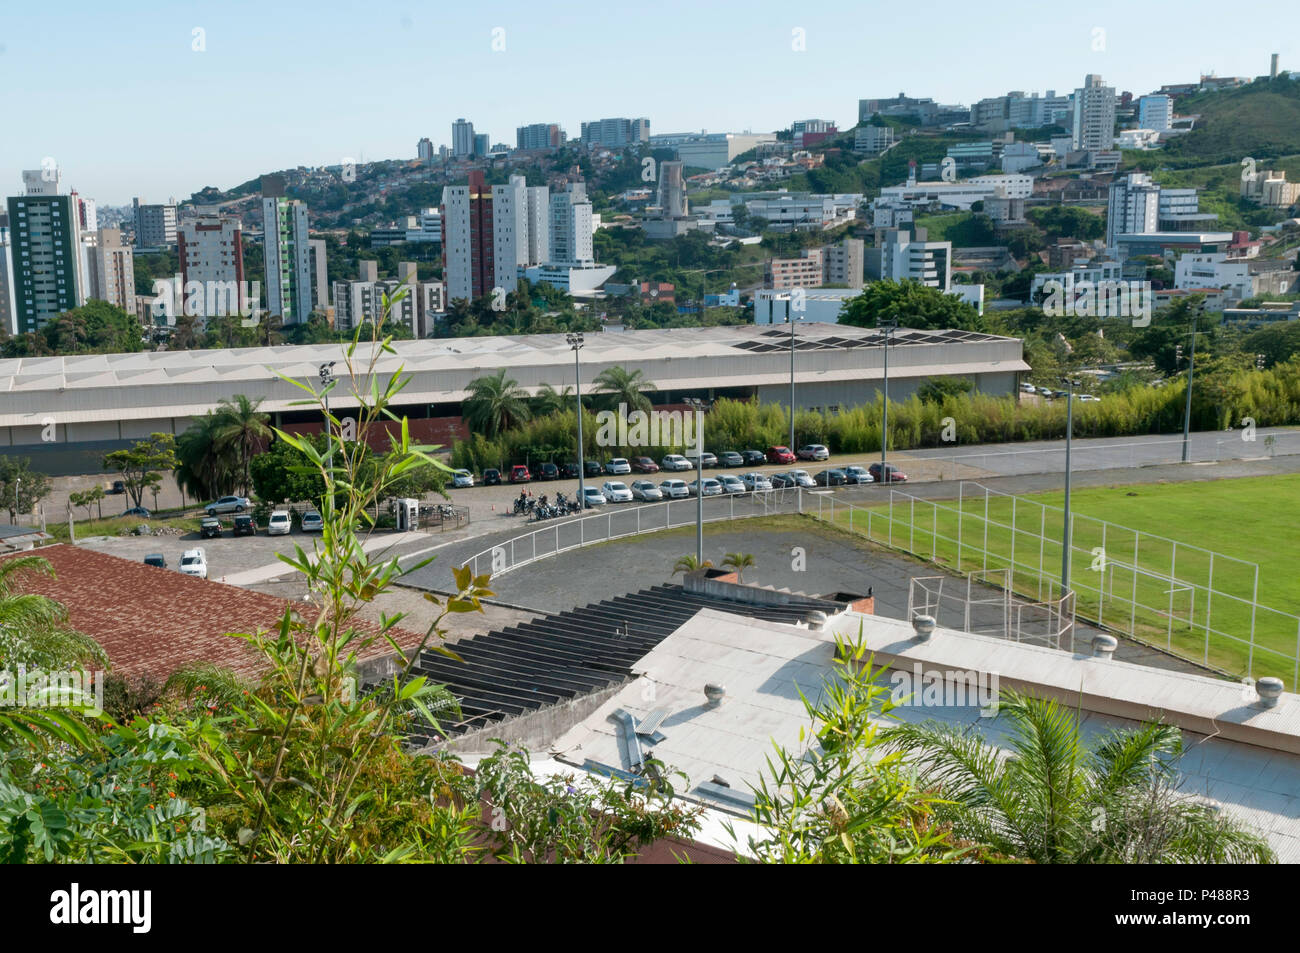 UNI BH. Unidade Buritis -Belo Horizonte/MG, Brasil - 07/03/2015. Foto ...